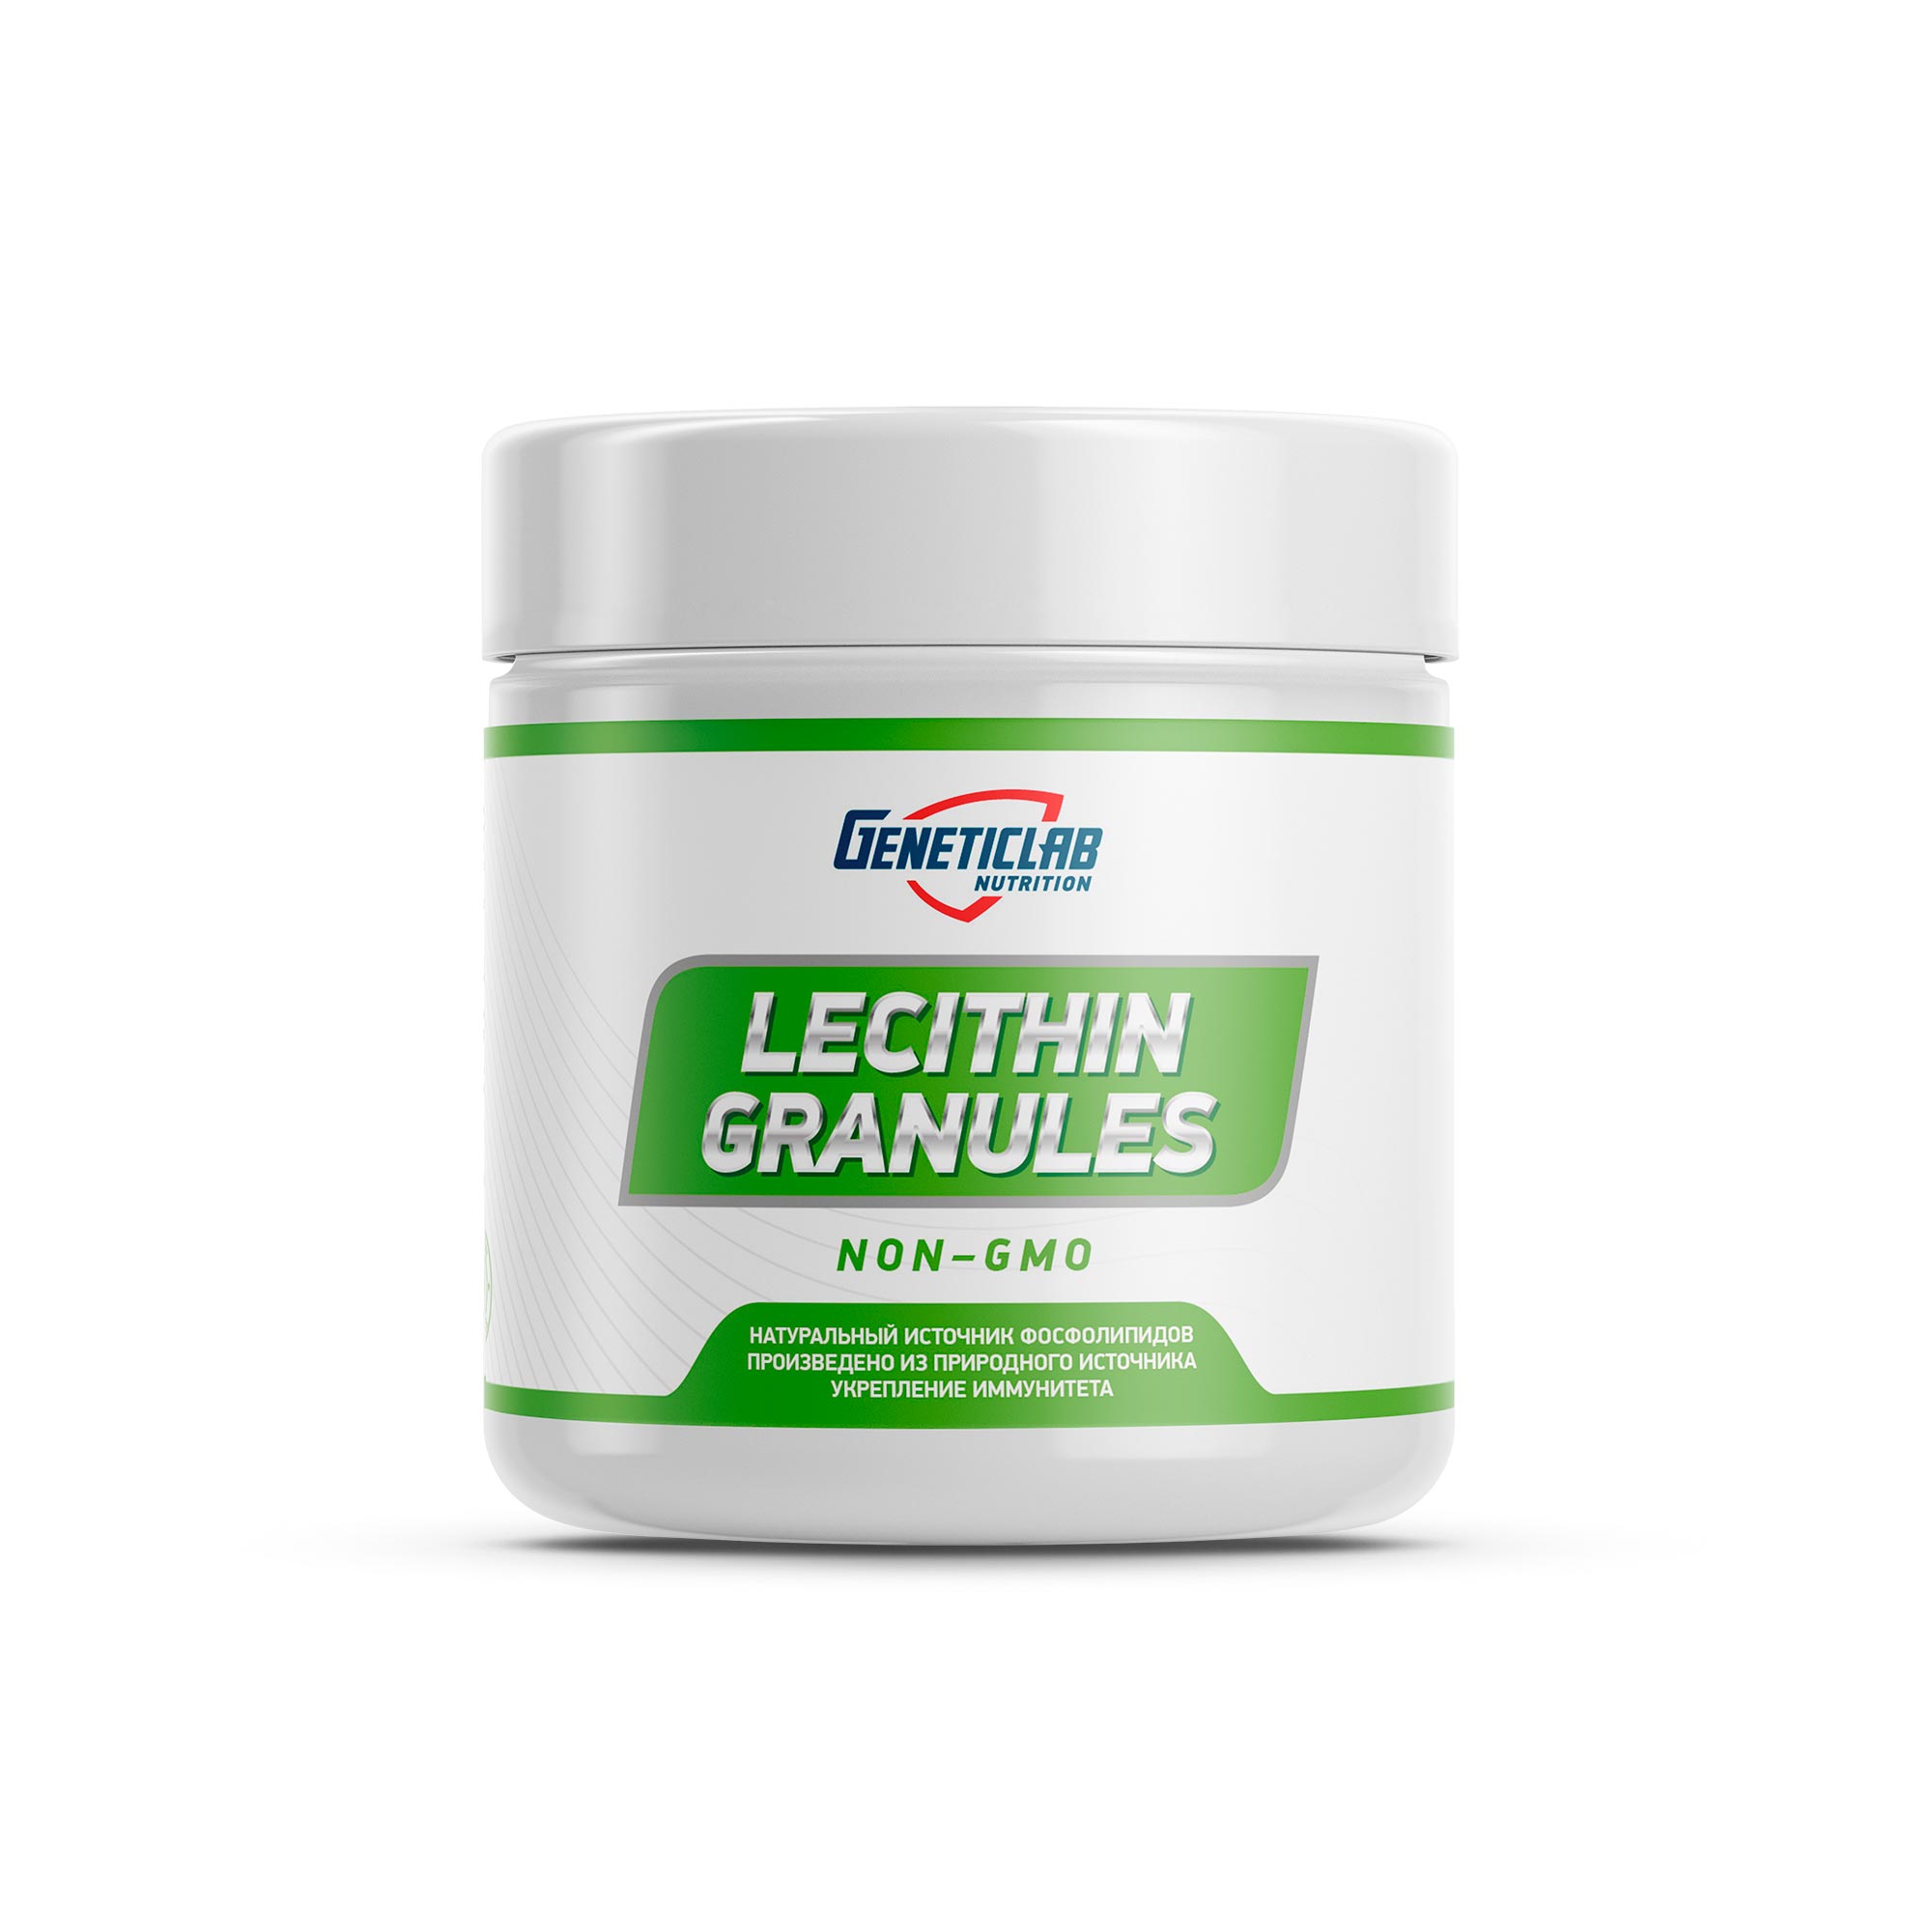 Geneticlab LECITHIN 200 g